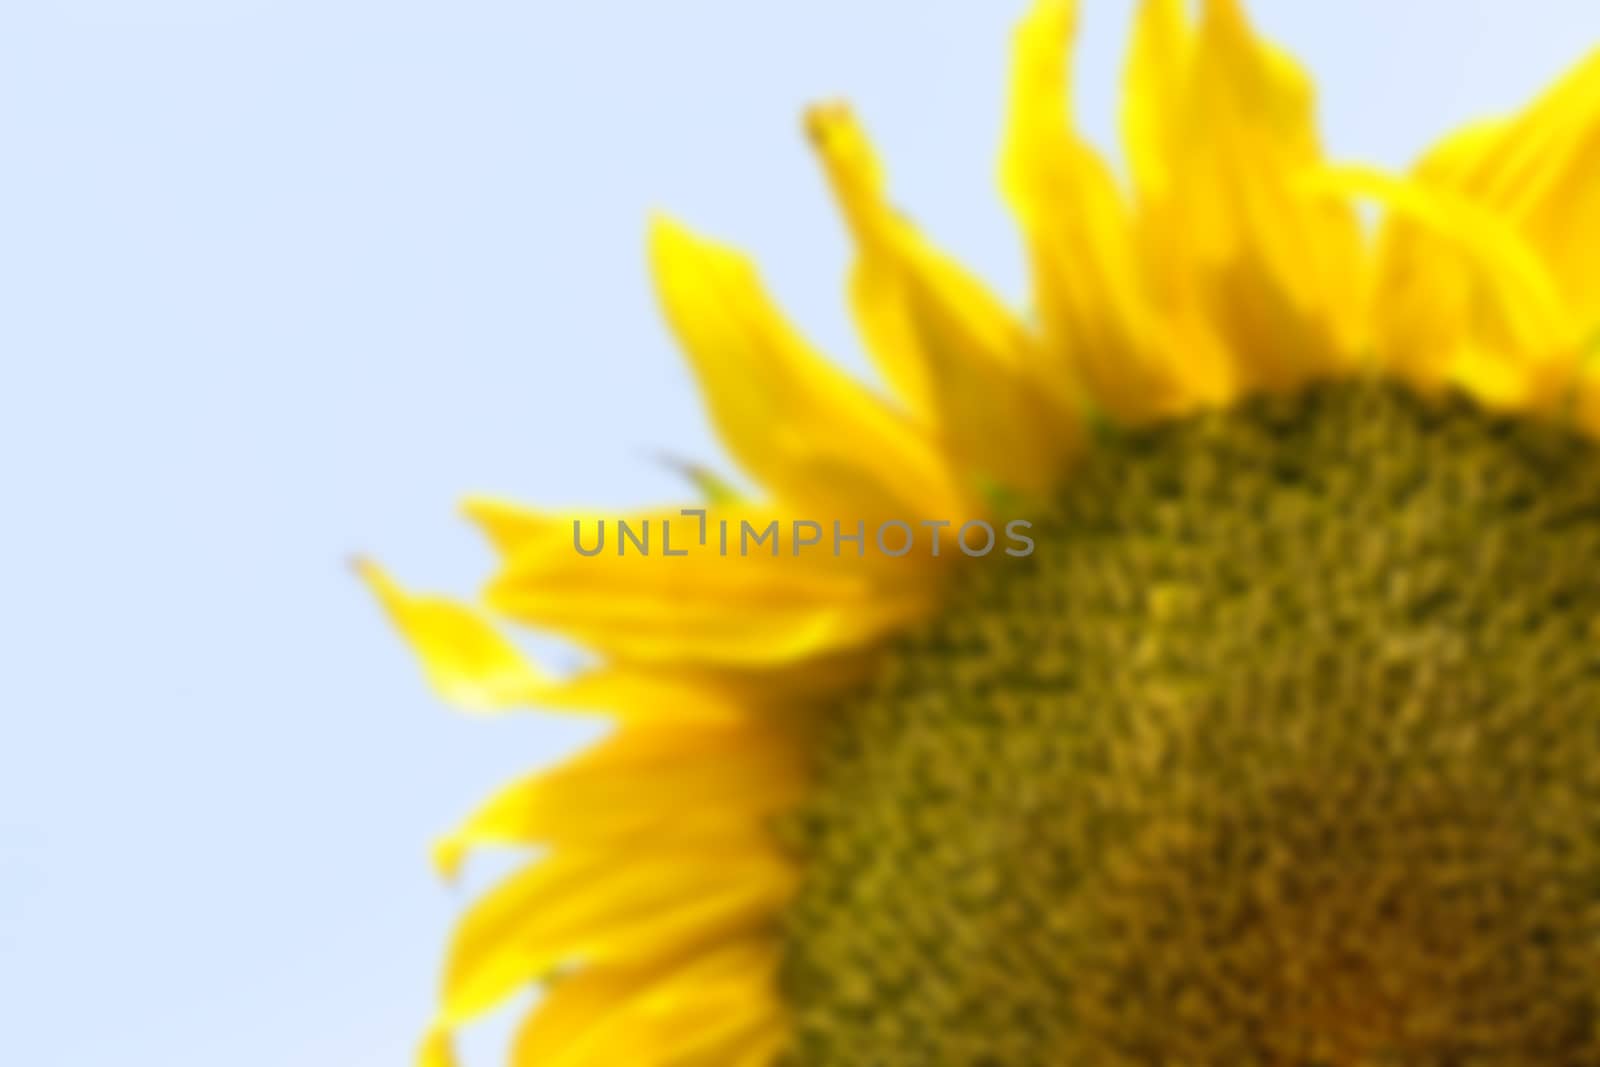 flower Sunflower, close-up by avq